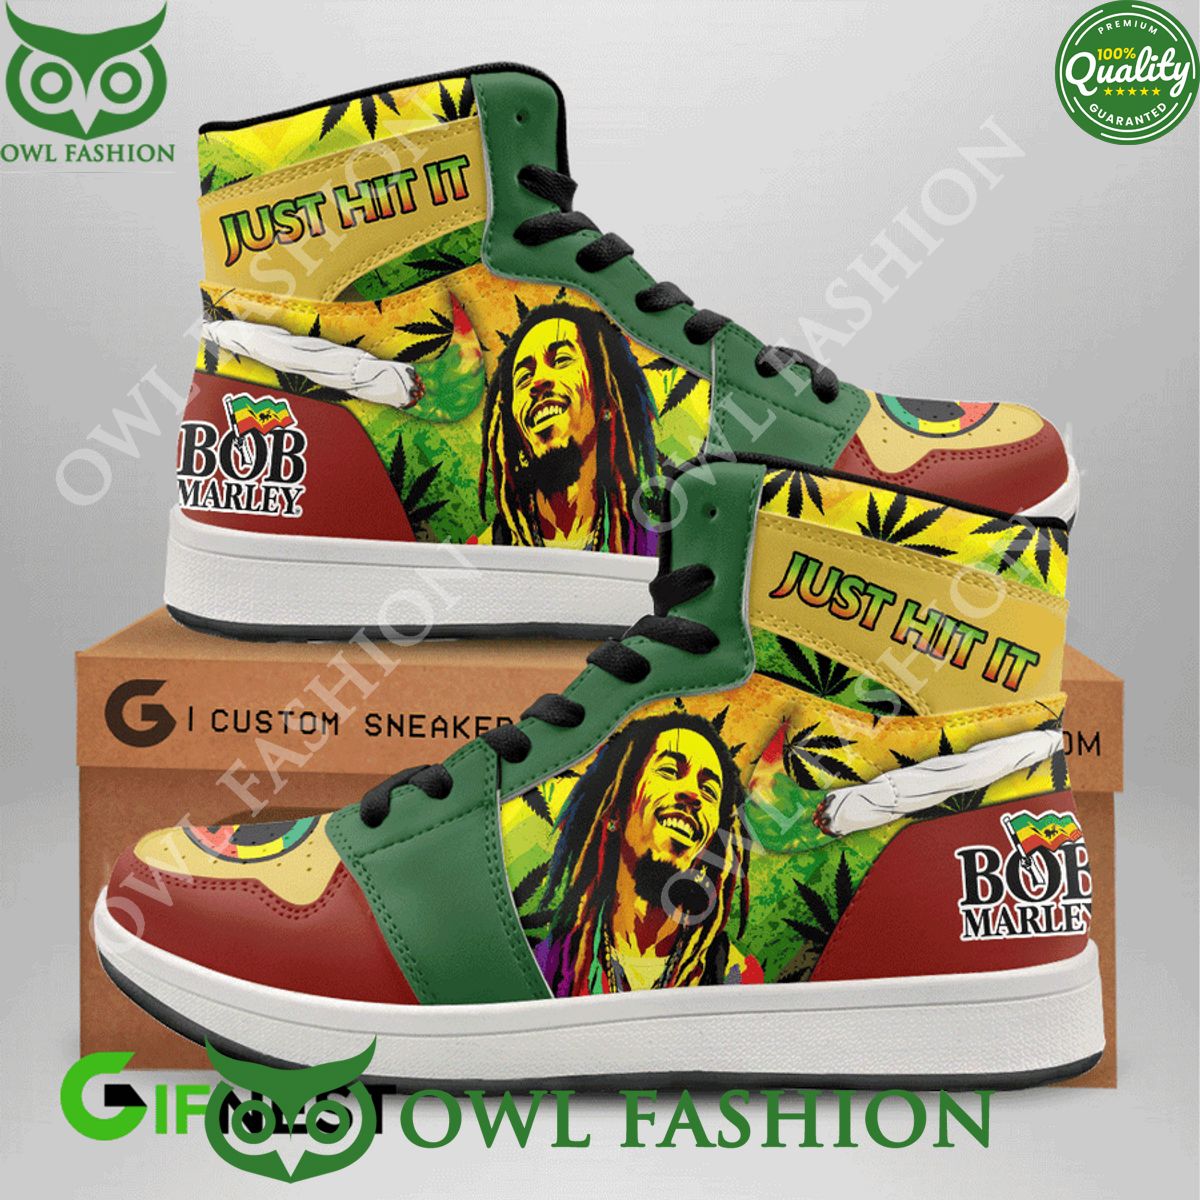 bob marley reggae singer jamaican just hit it air jordan high top 1 shoes 1 pGdo6.jpg